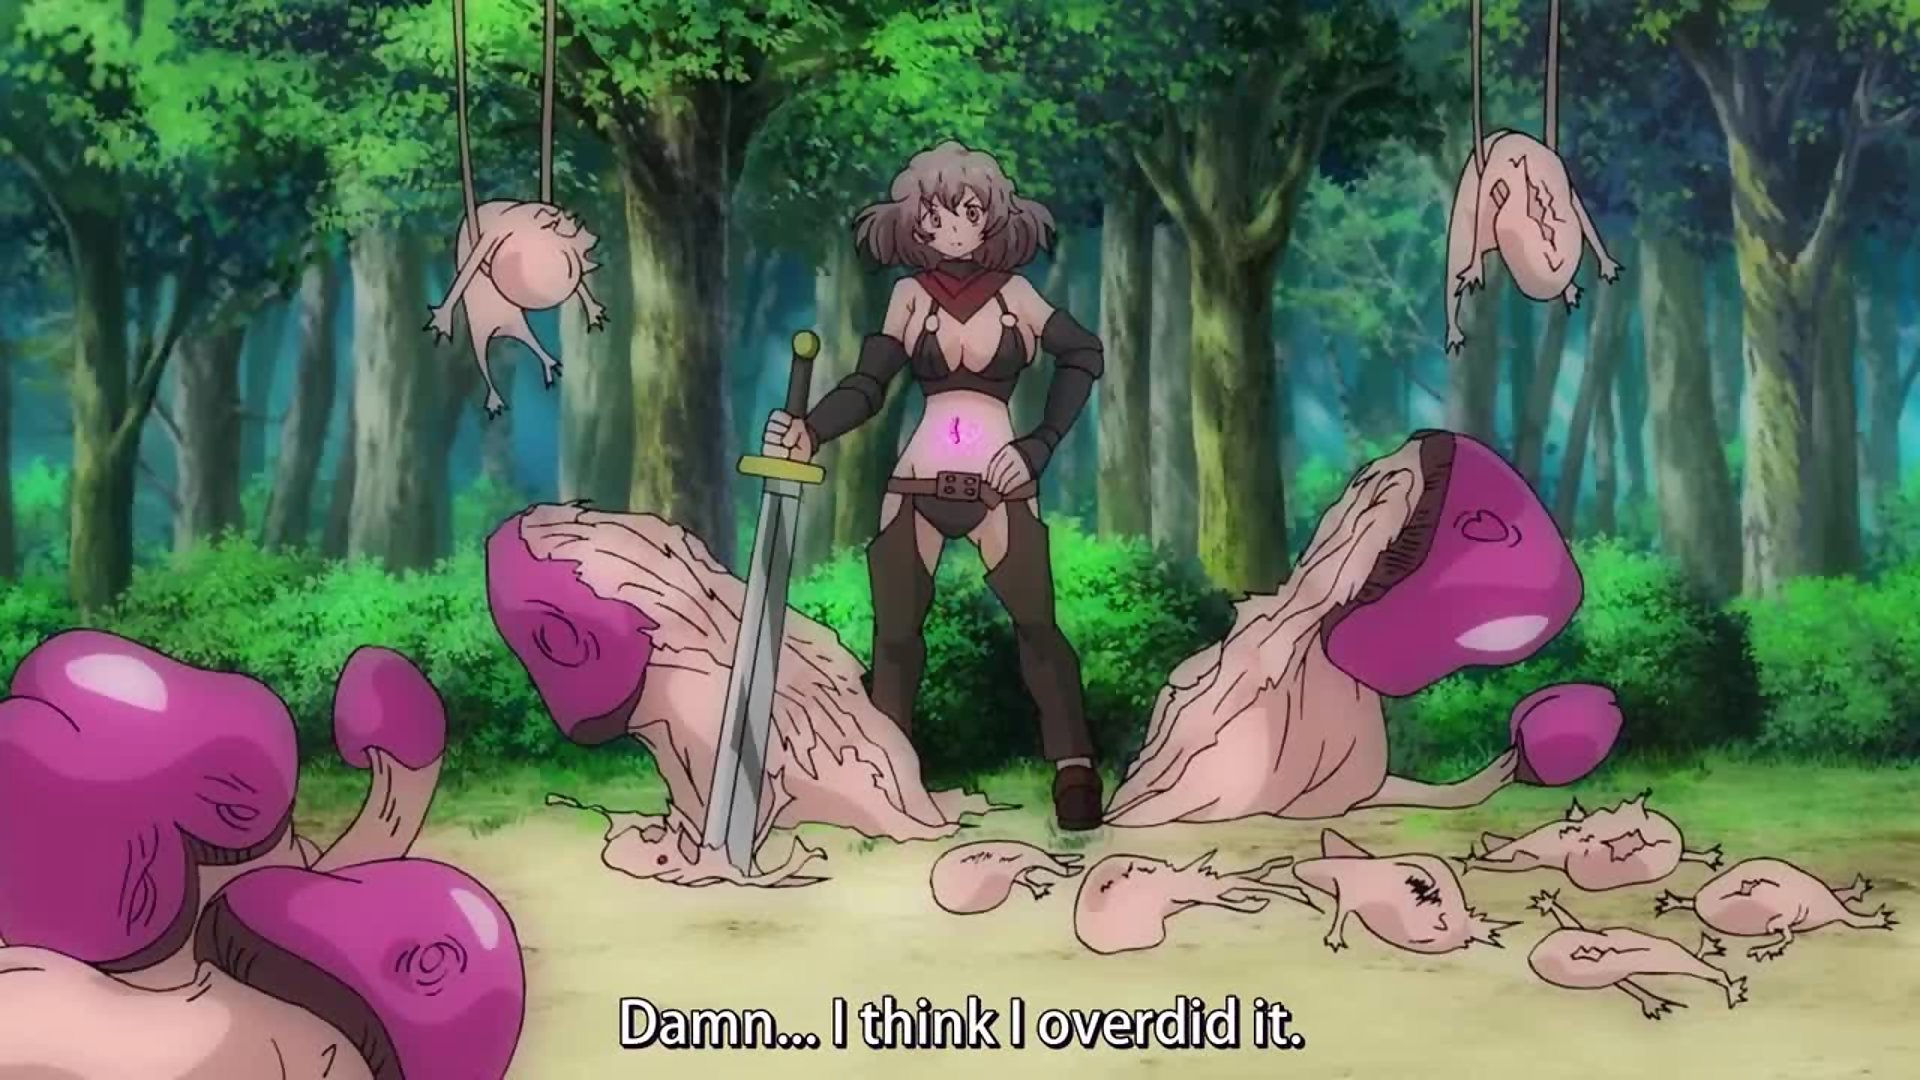 Branded Azel 1 - Warrior anime girl is gangbanged by mushroom monsters pic